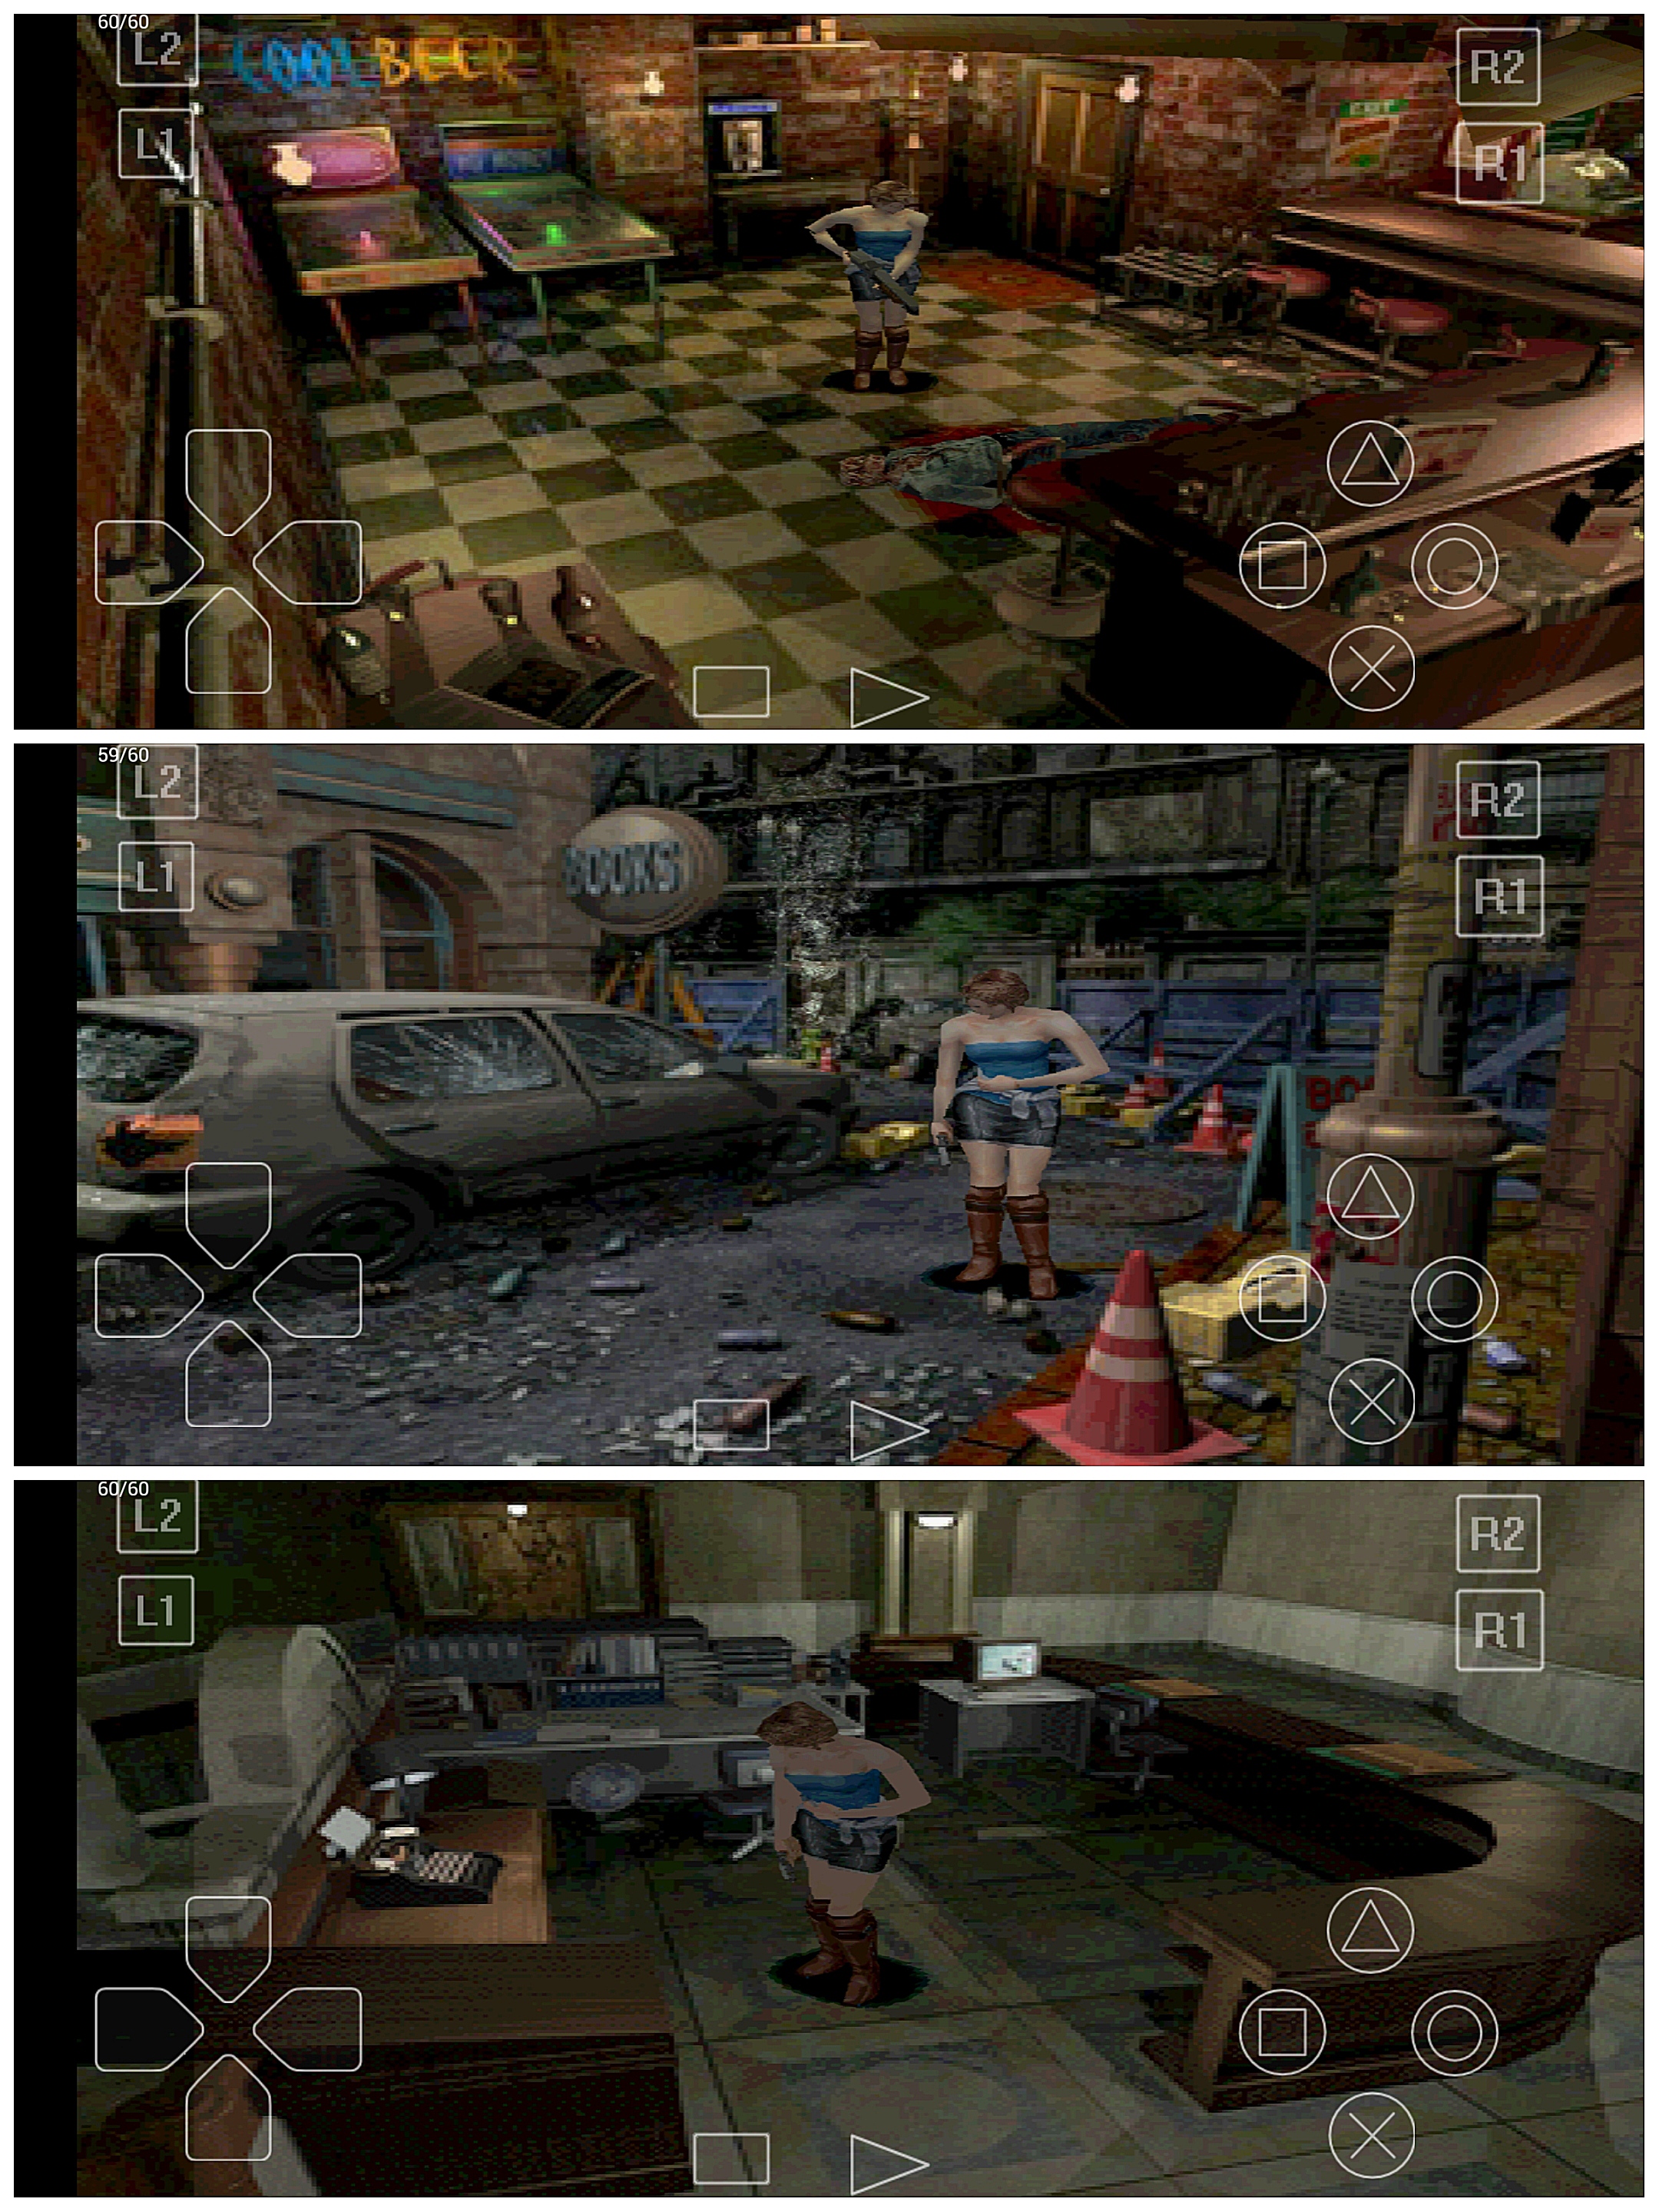 [Game Ps1] Resident Evil 3 Nemesis Việt Hóa